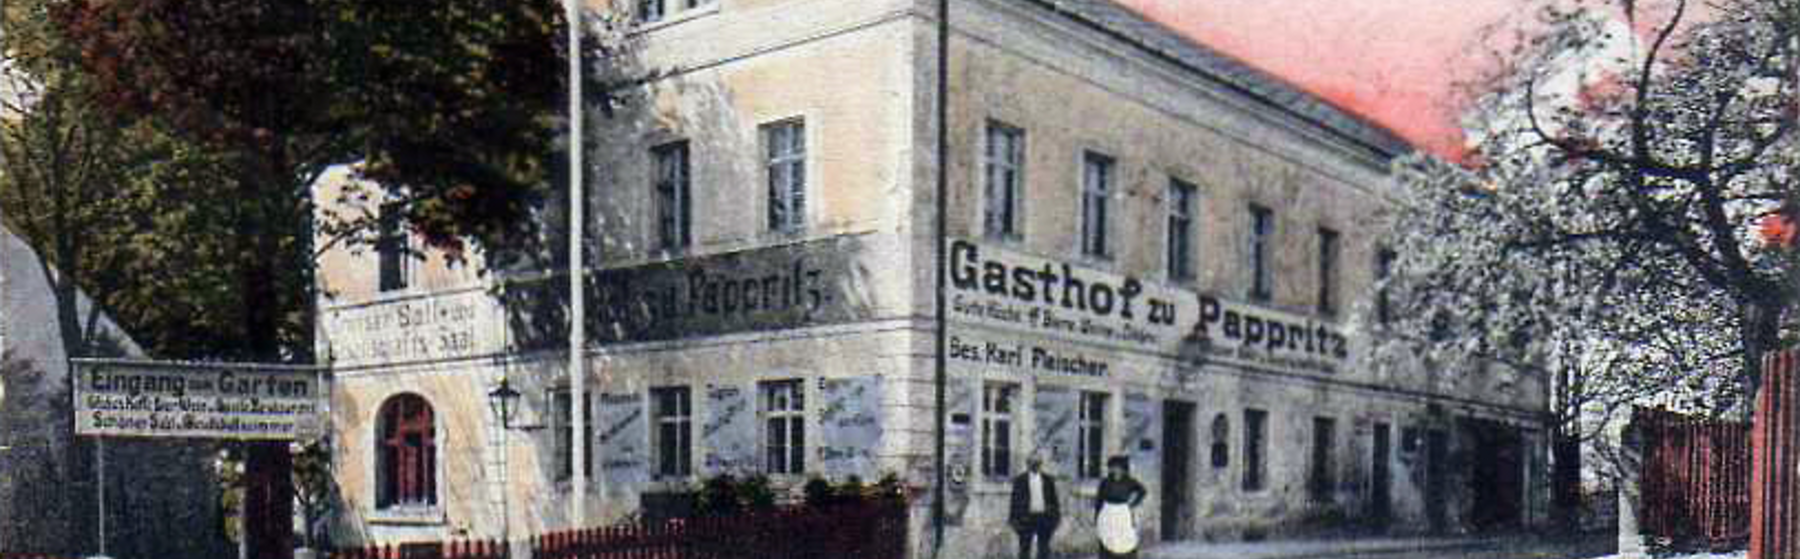 Gasthof Pappritz